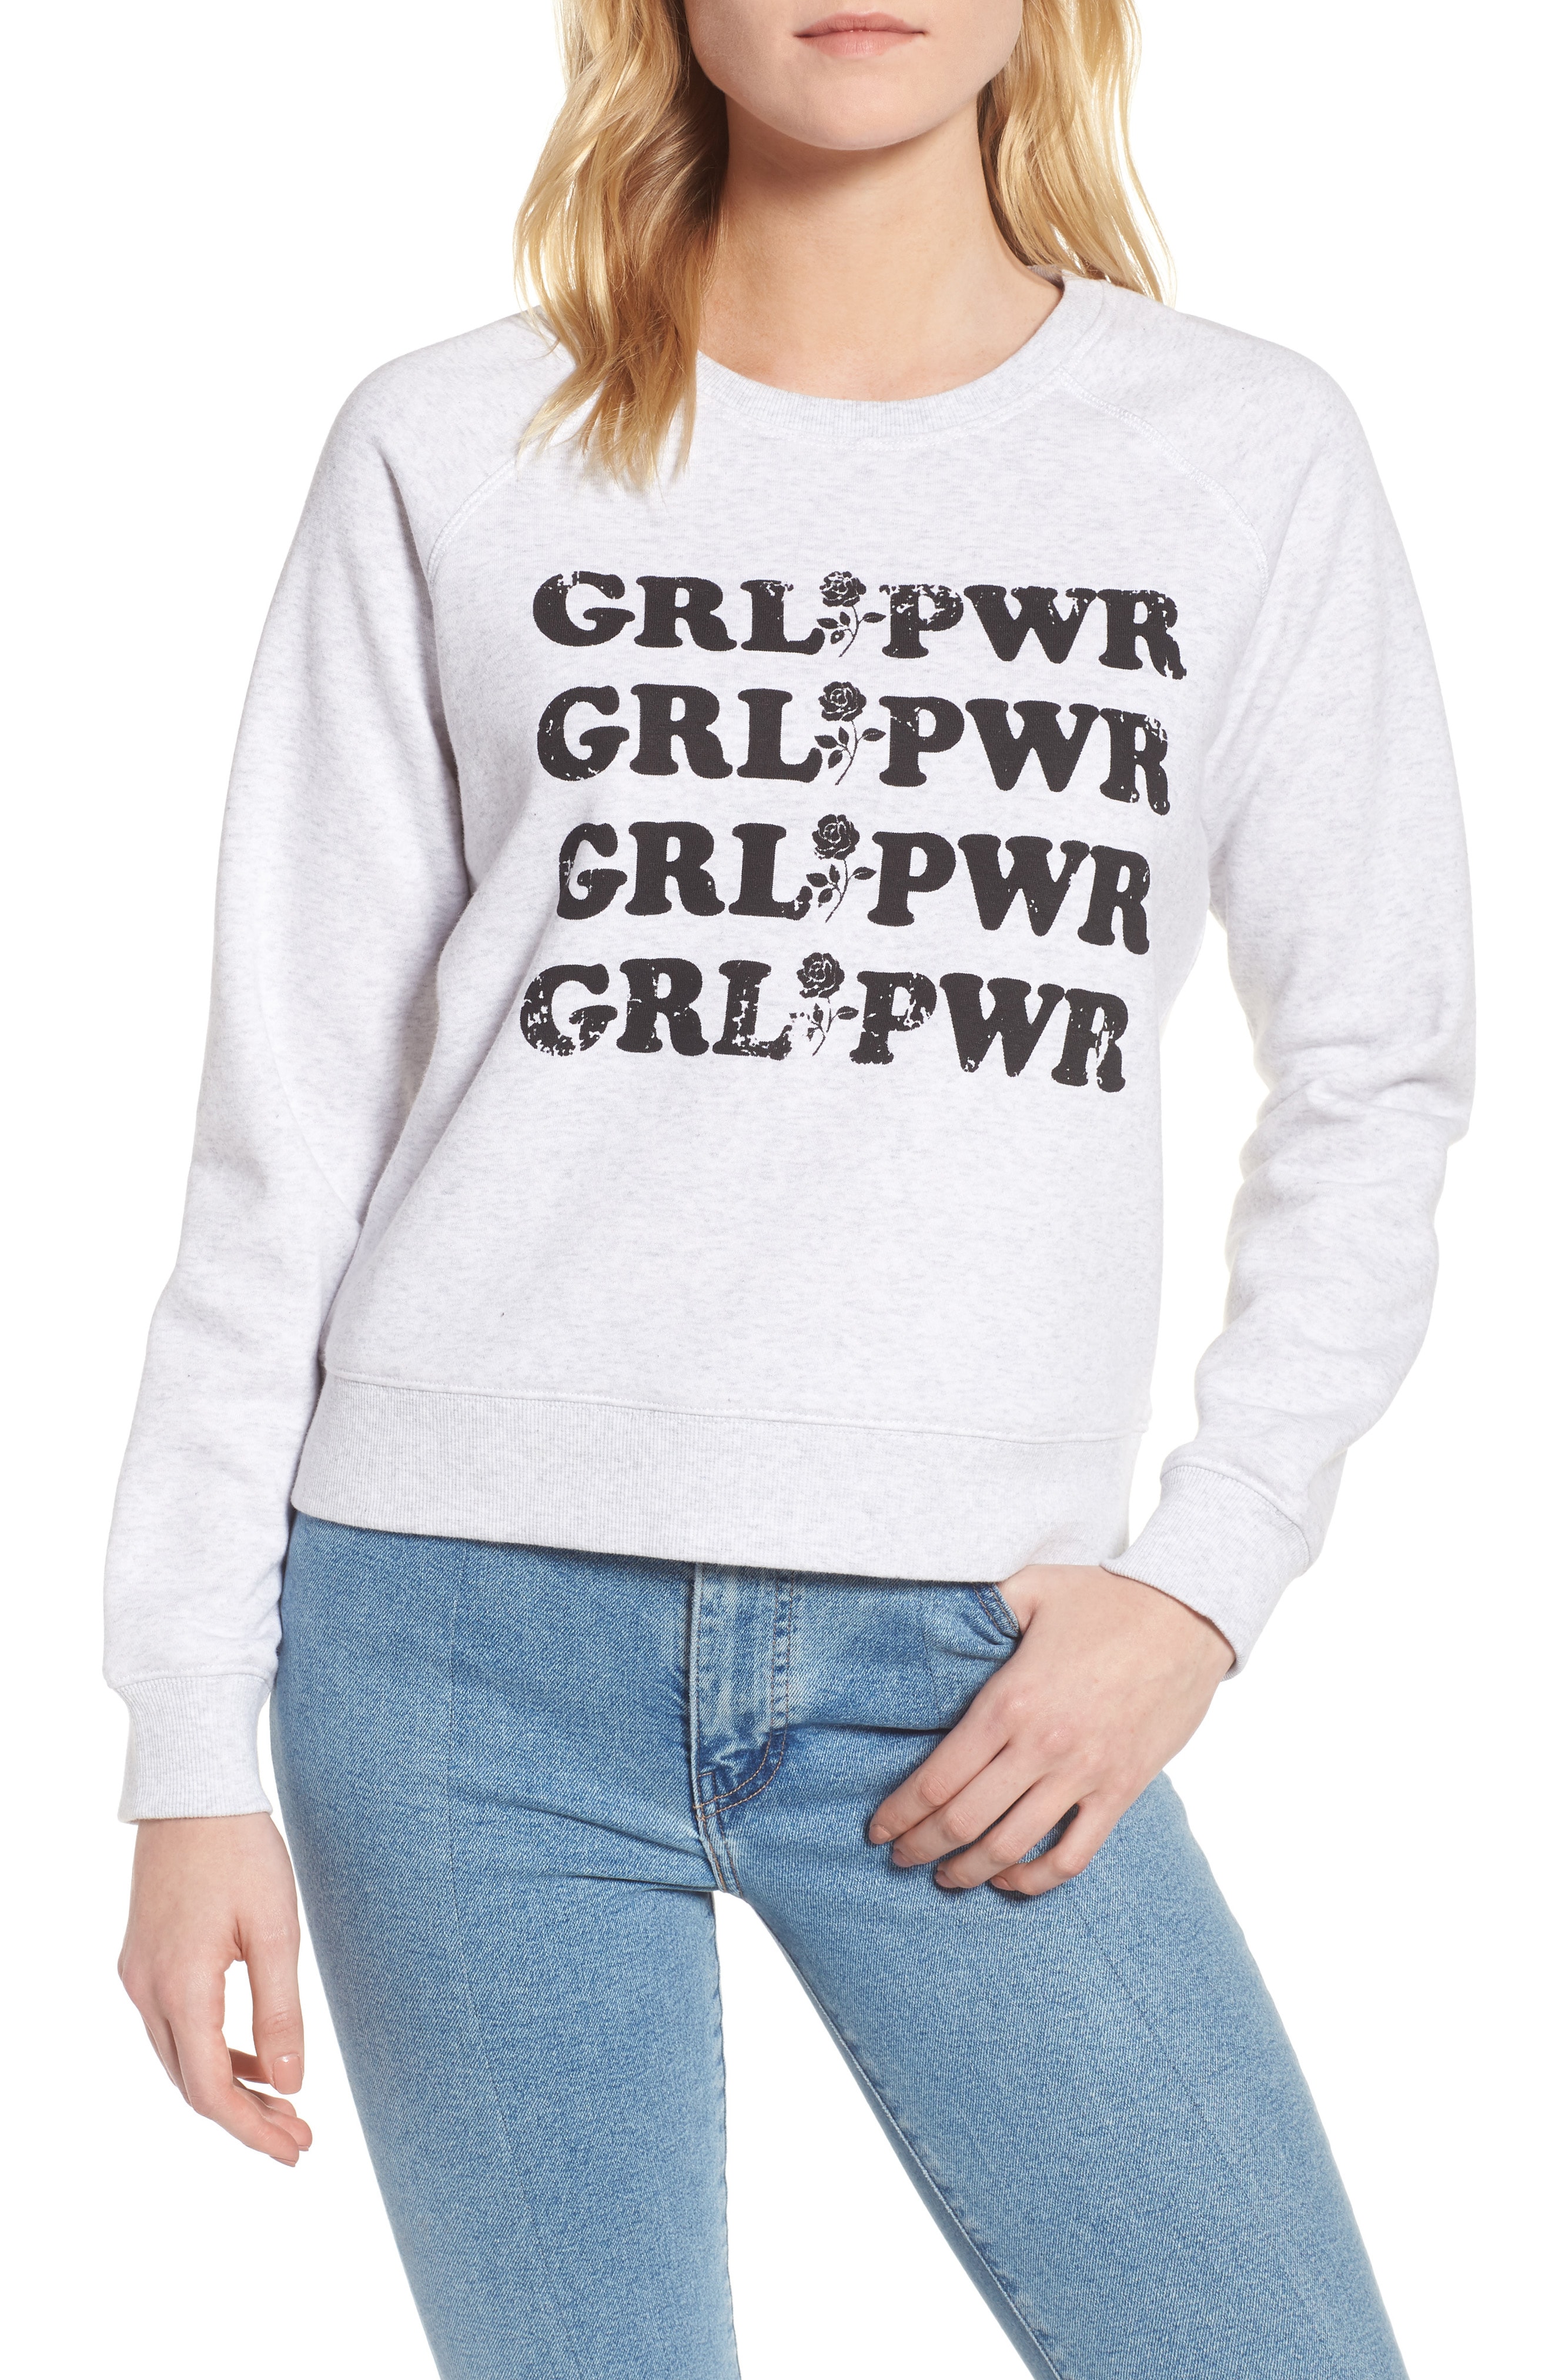 Rebecca Minkoff Girl Power Sweatshirt